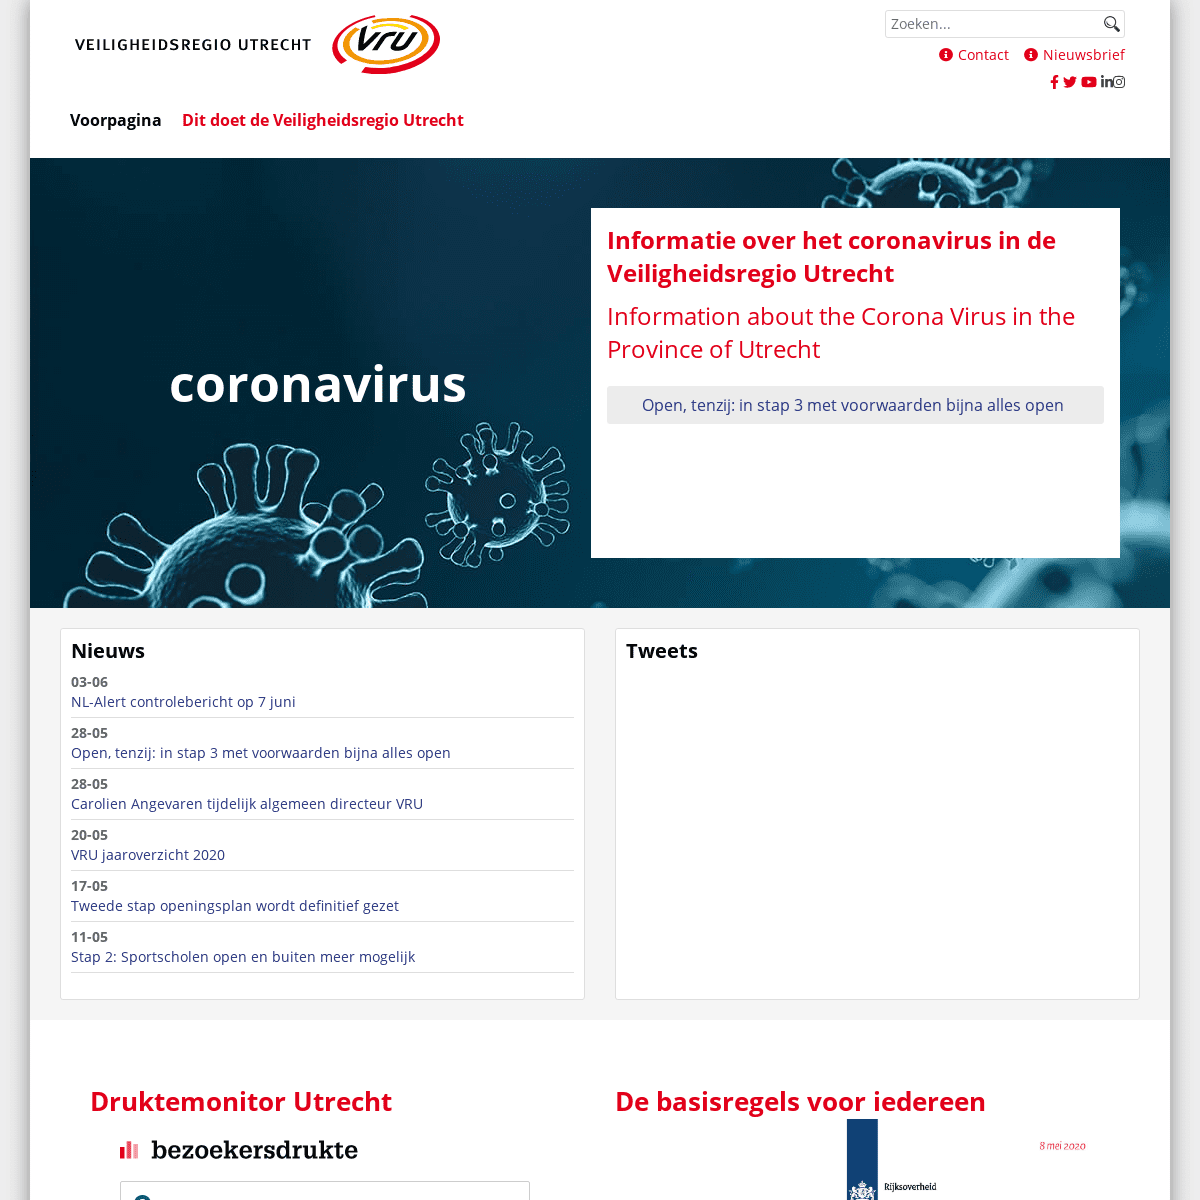 A complete backup of https://vru.nl